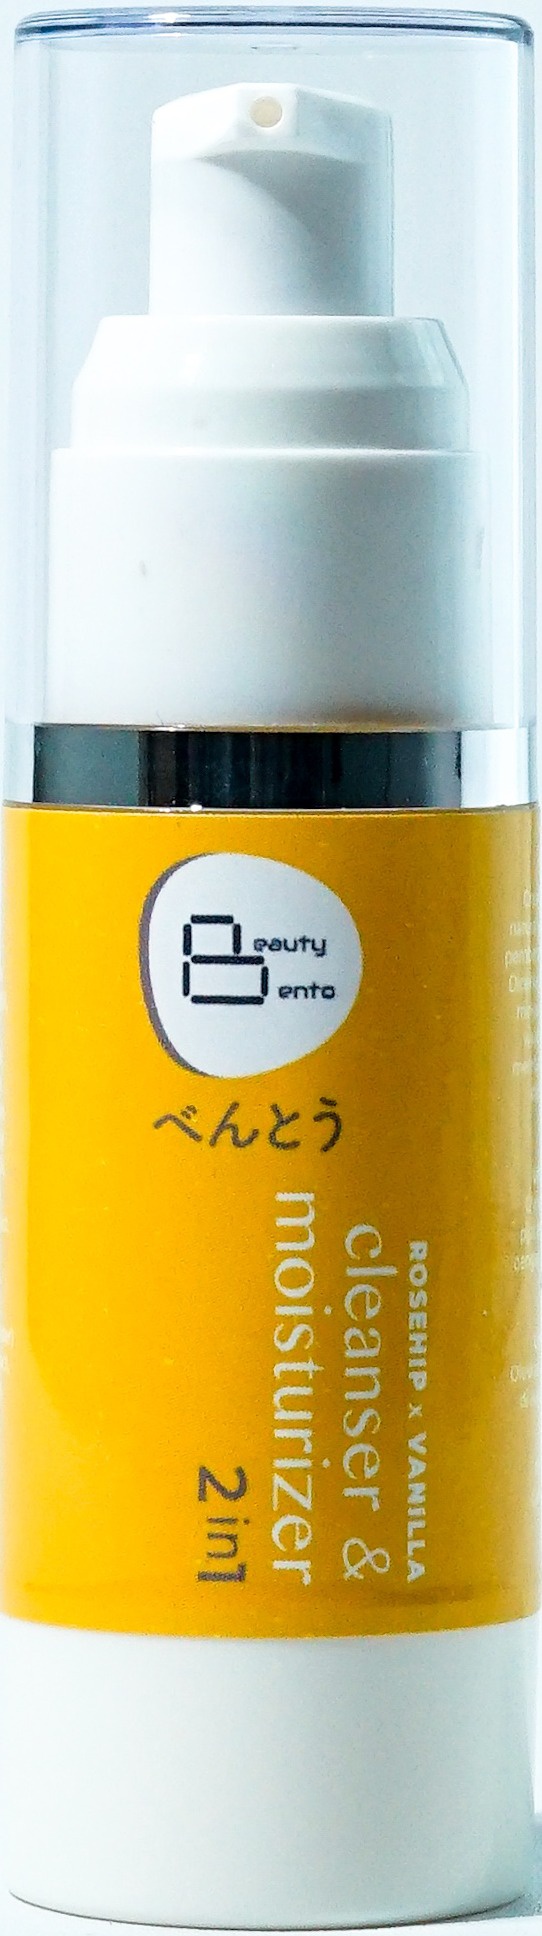 Beauty Bento Rosehip X Vanilla 2in1 Cleanser & Moisturizer